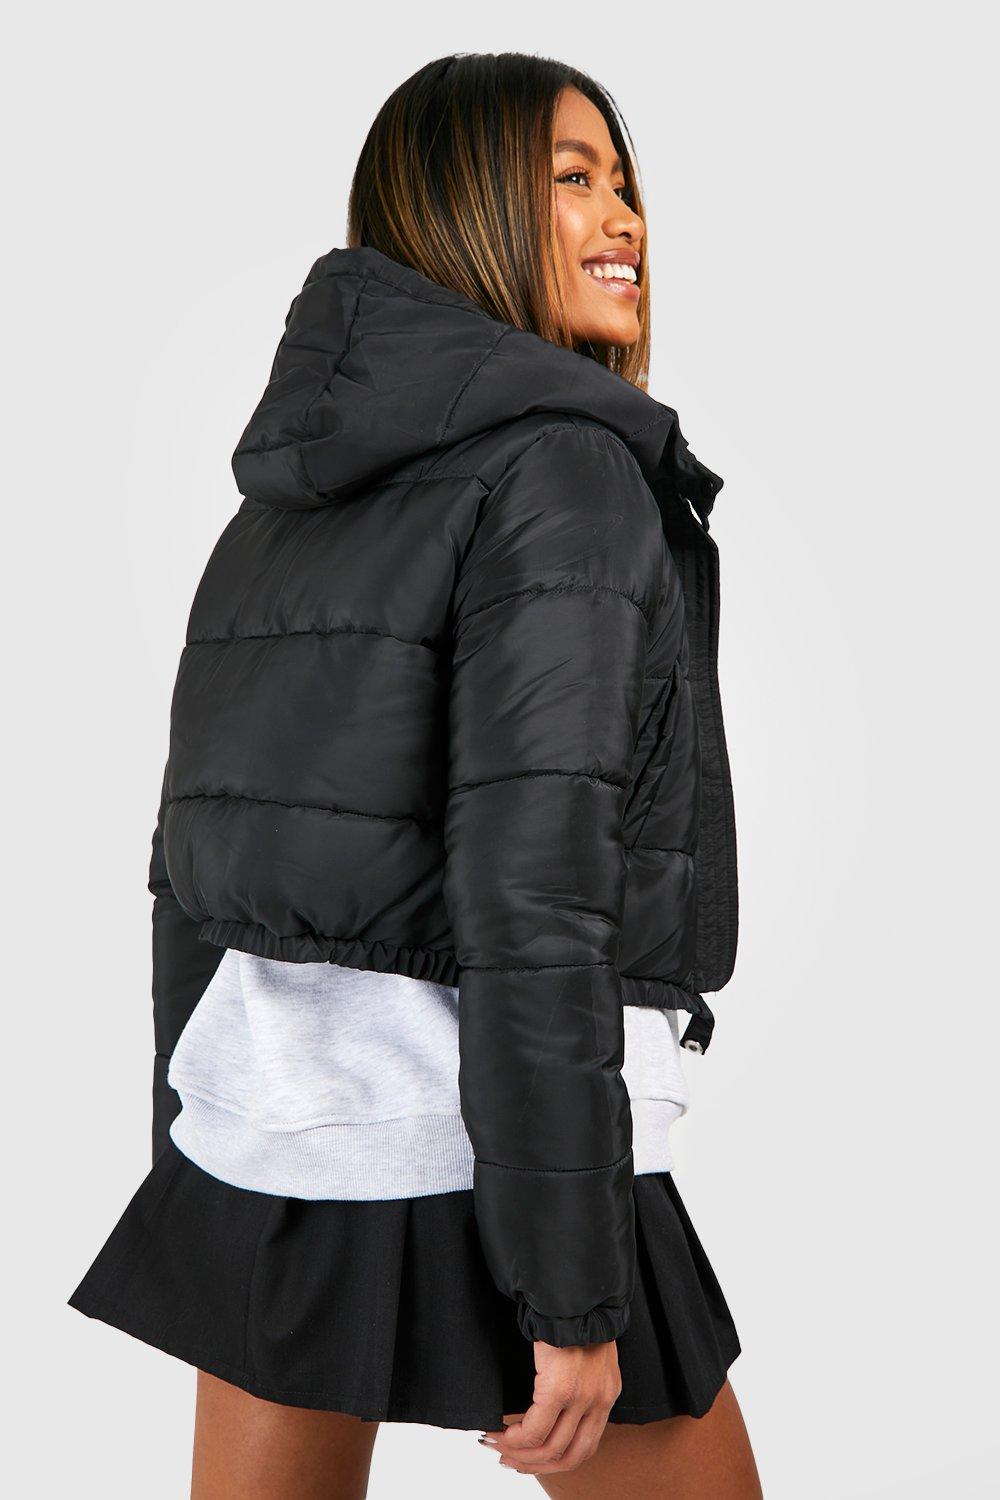 https://media.boohoo.com/i/boohoo/fzz83514_black_xl_1/female-black-hooded-crop-puffer-jacket